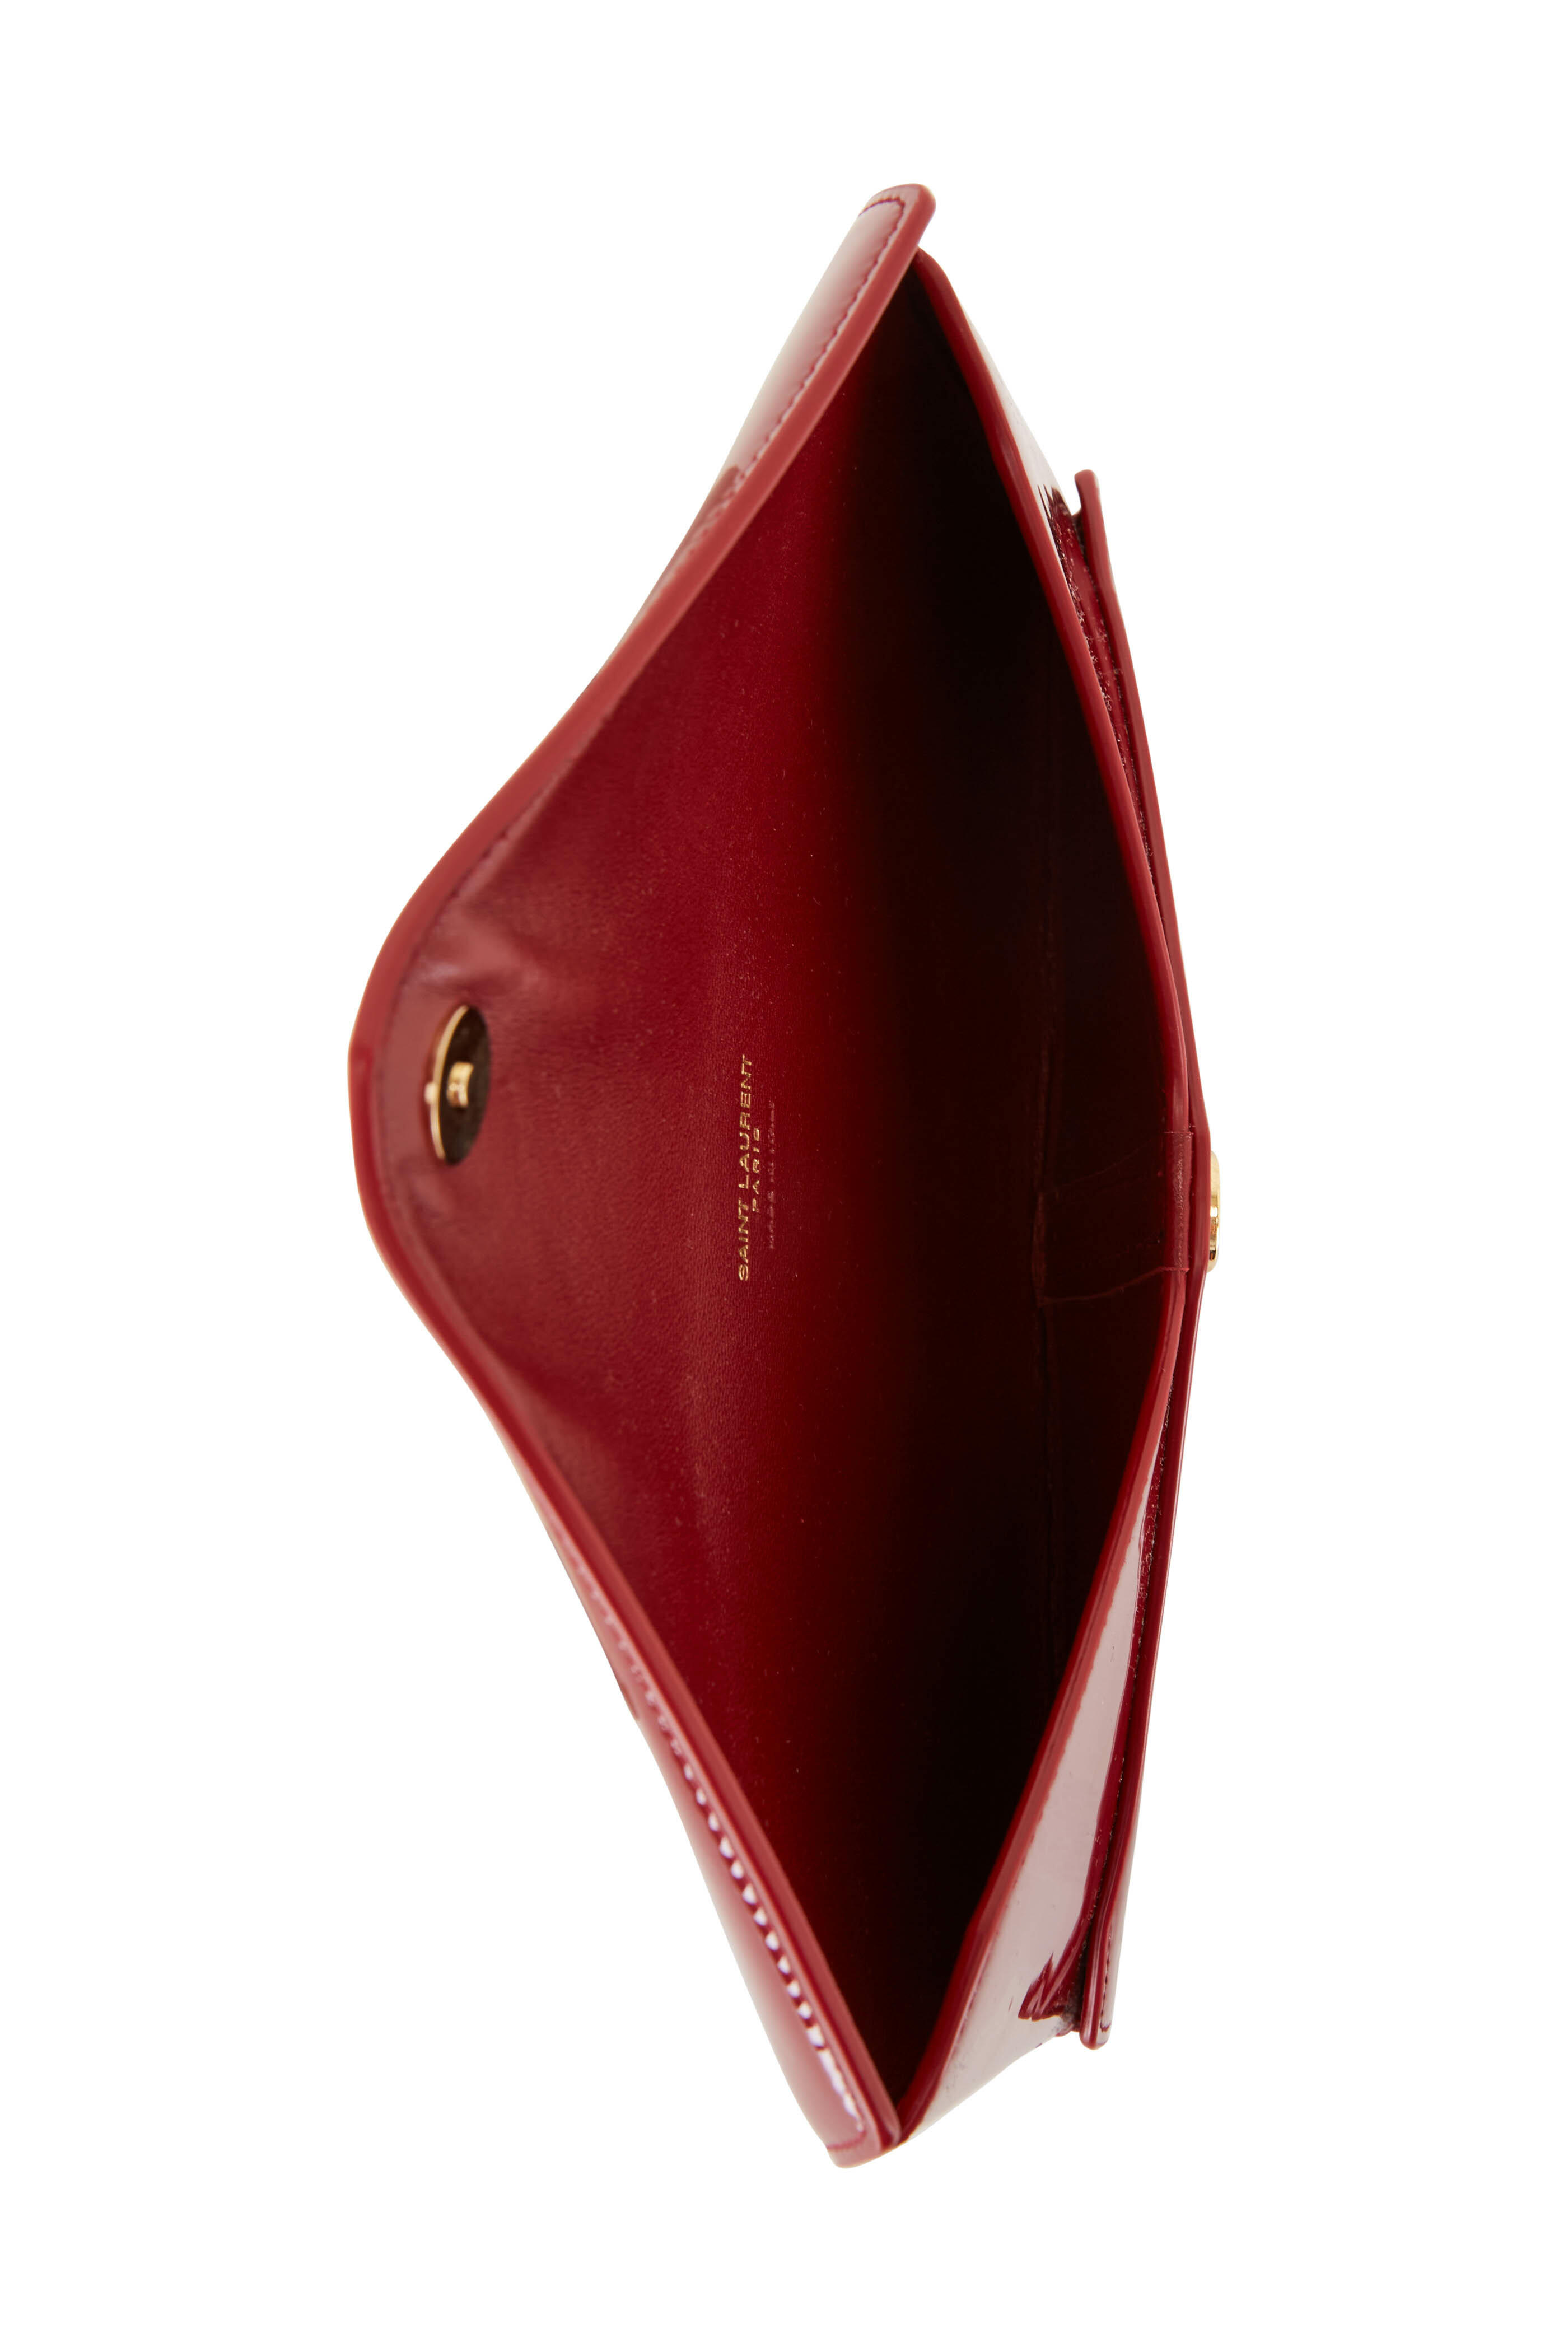 Saint Laurent - Paloma Red Patent Leather Envelope Clutch